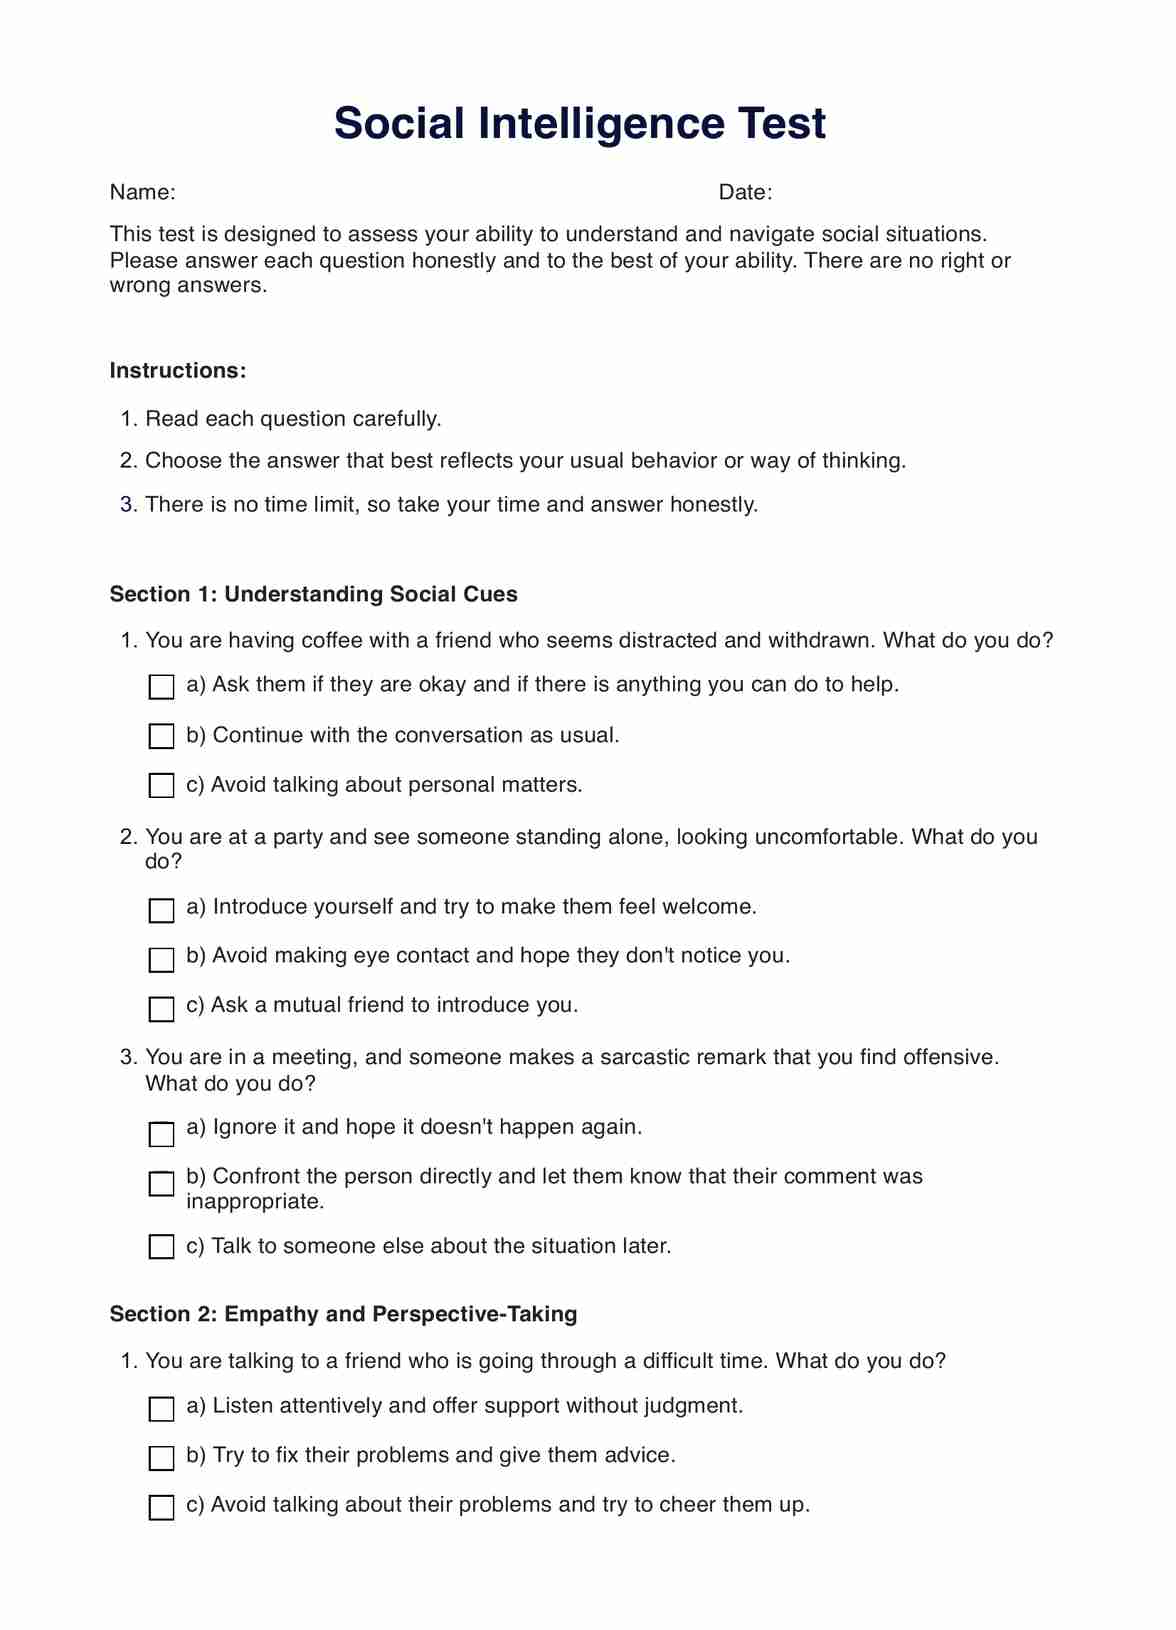 Social Intelligence Test PDF Example